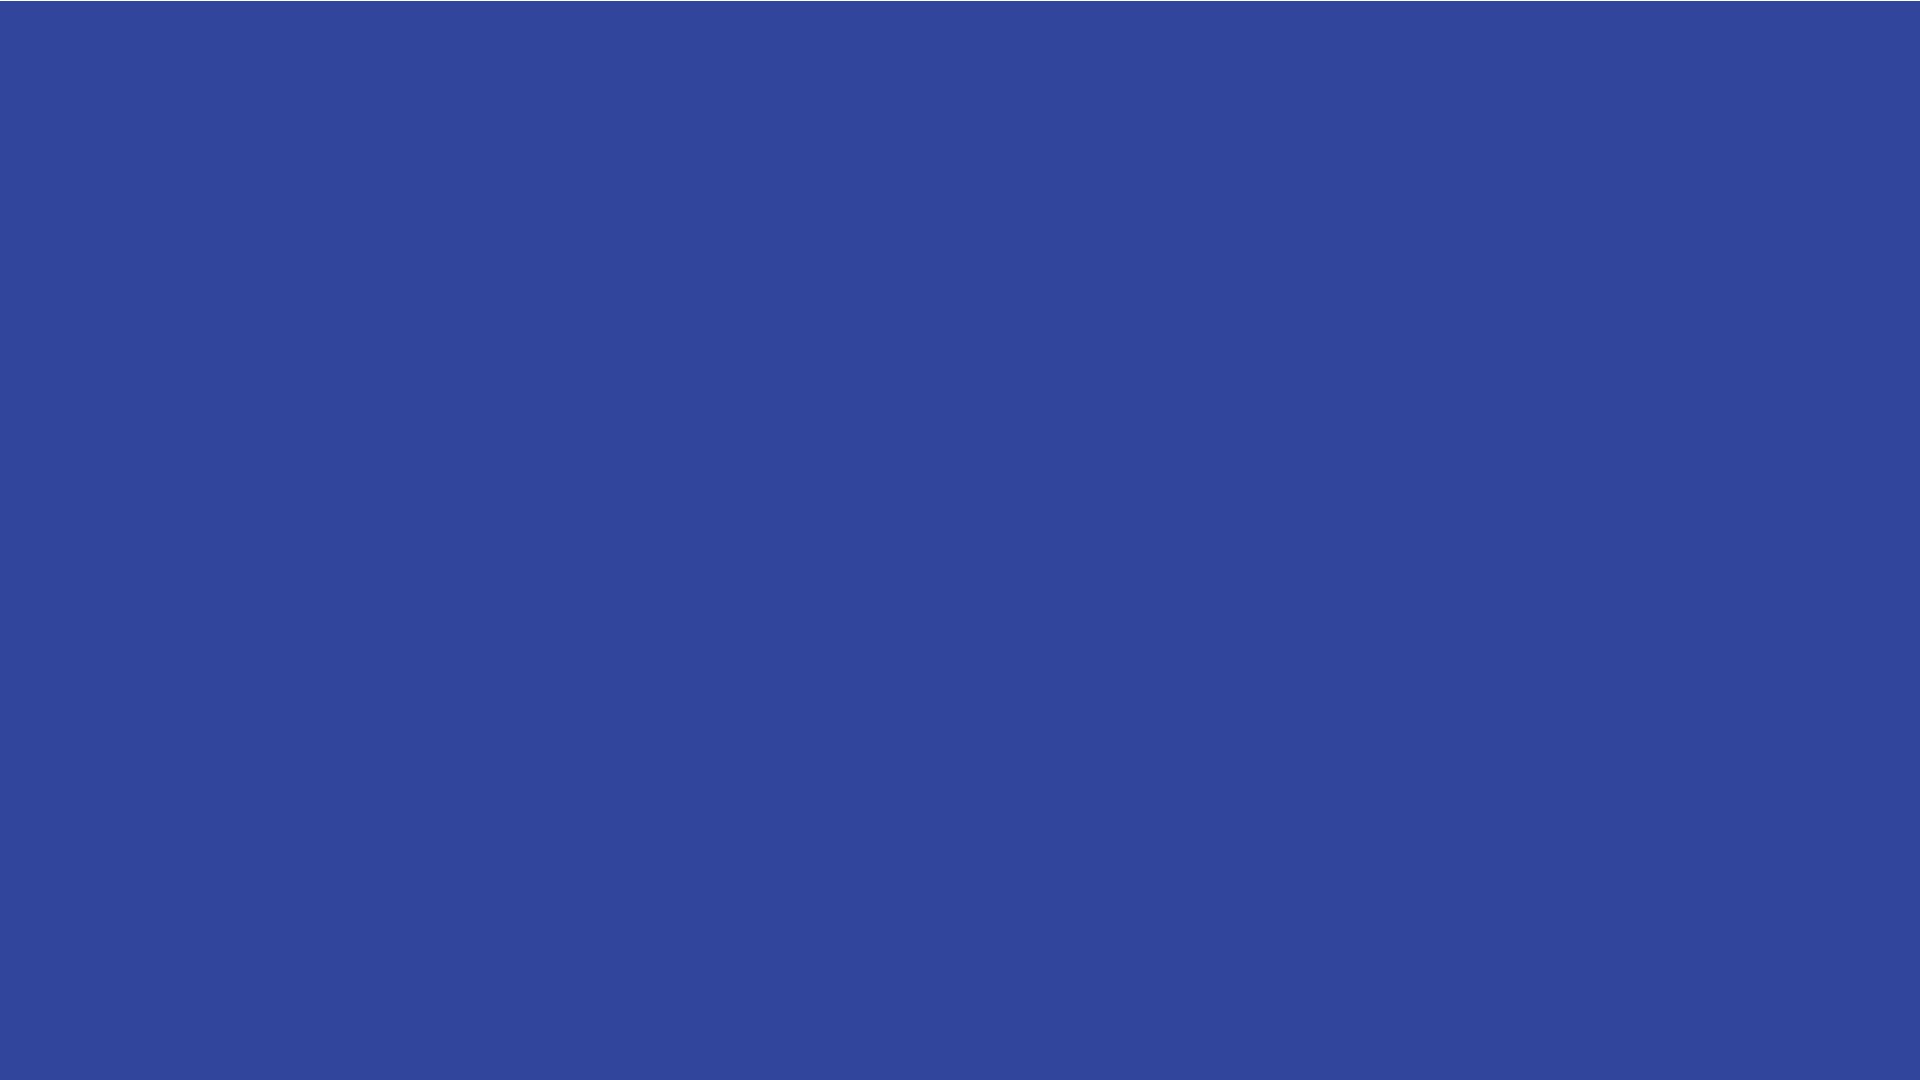 Medium Blue Solid Color Background